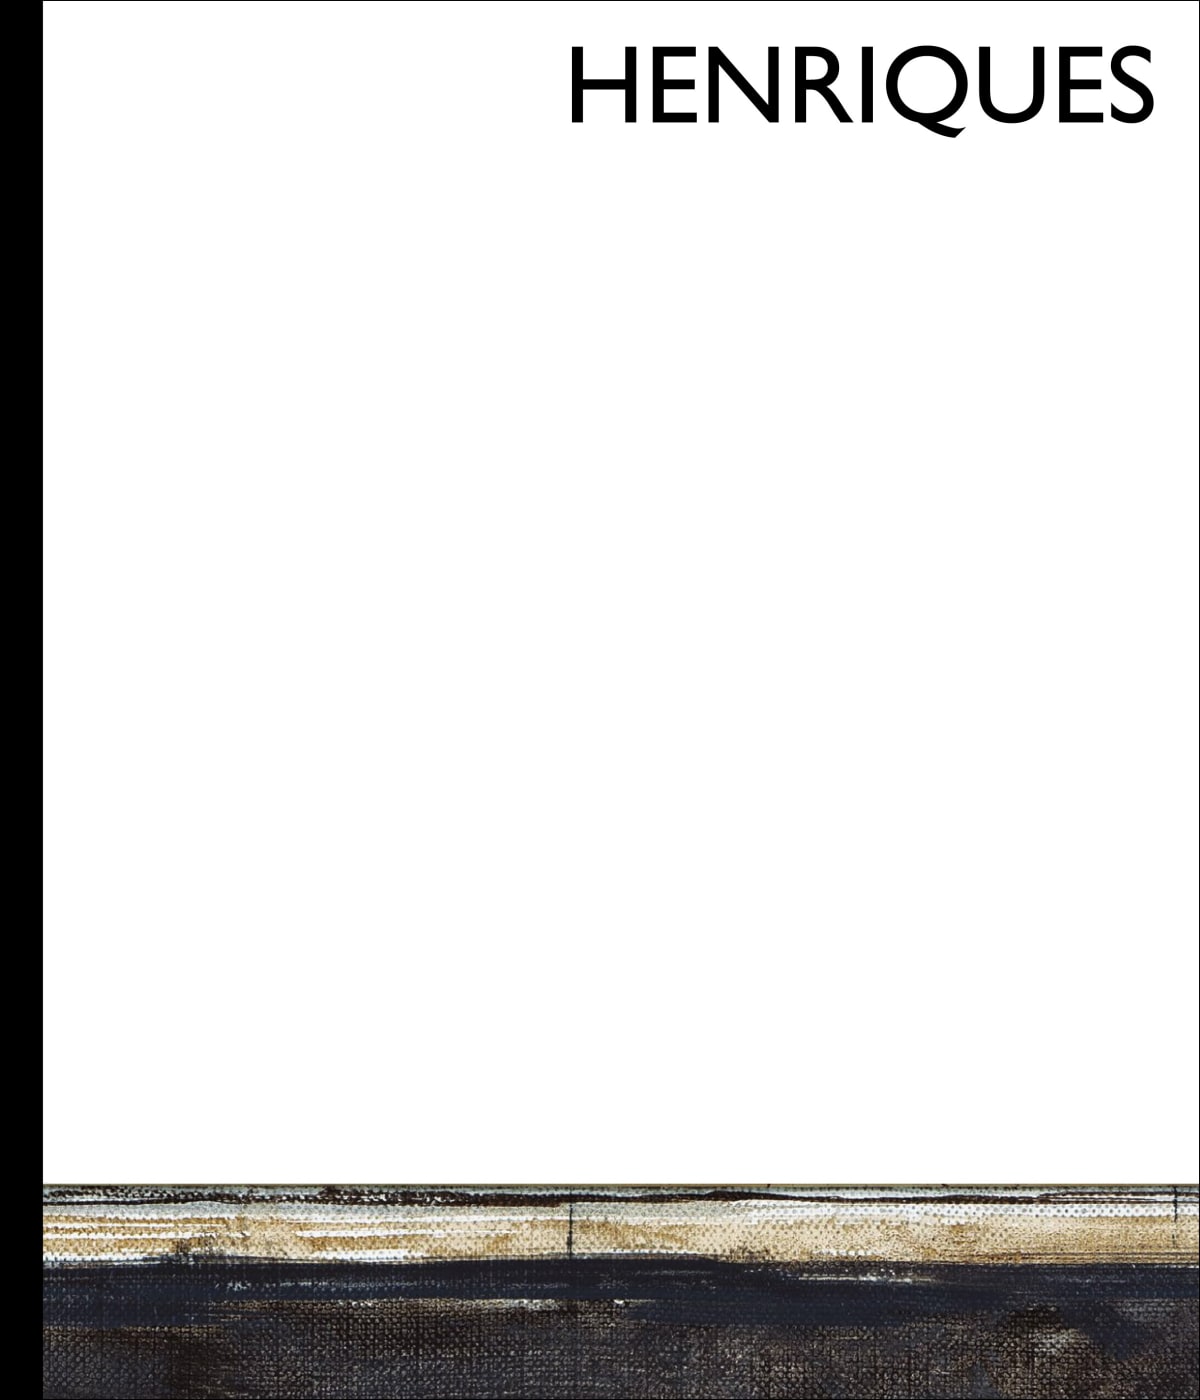 Ben Henriques: Work